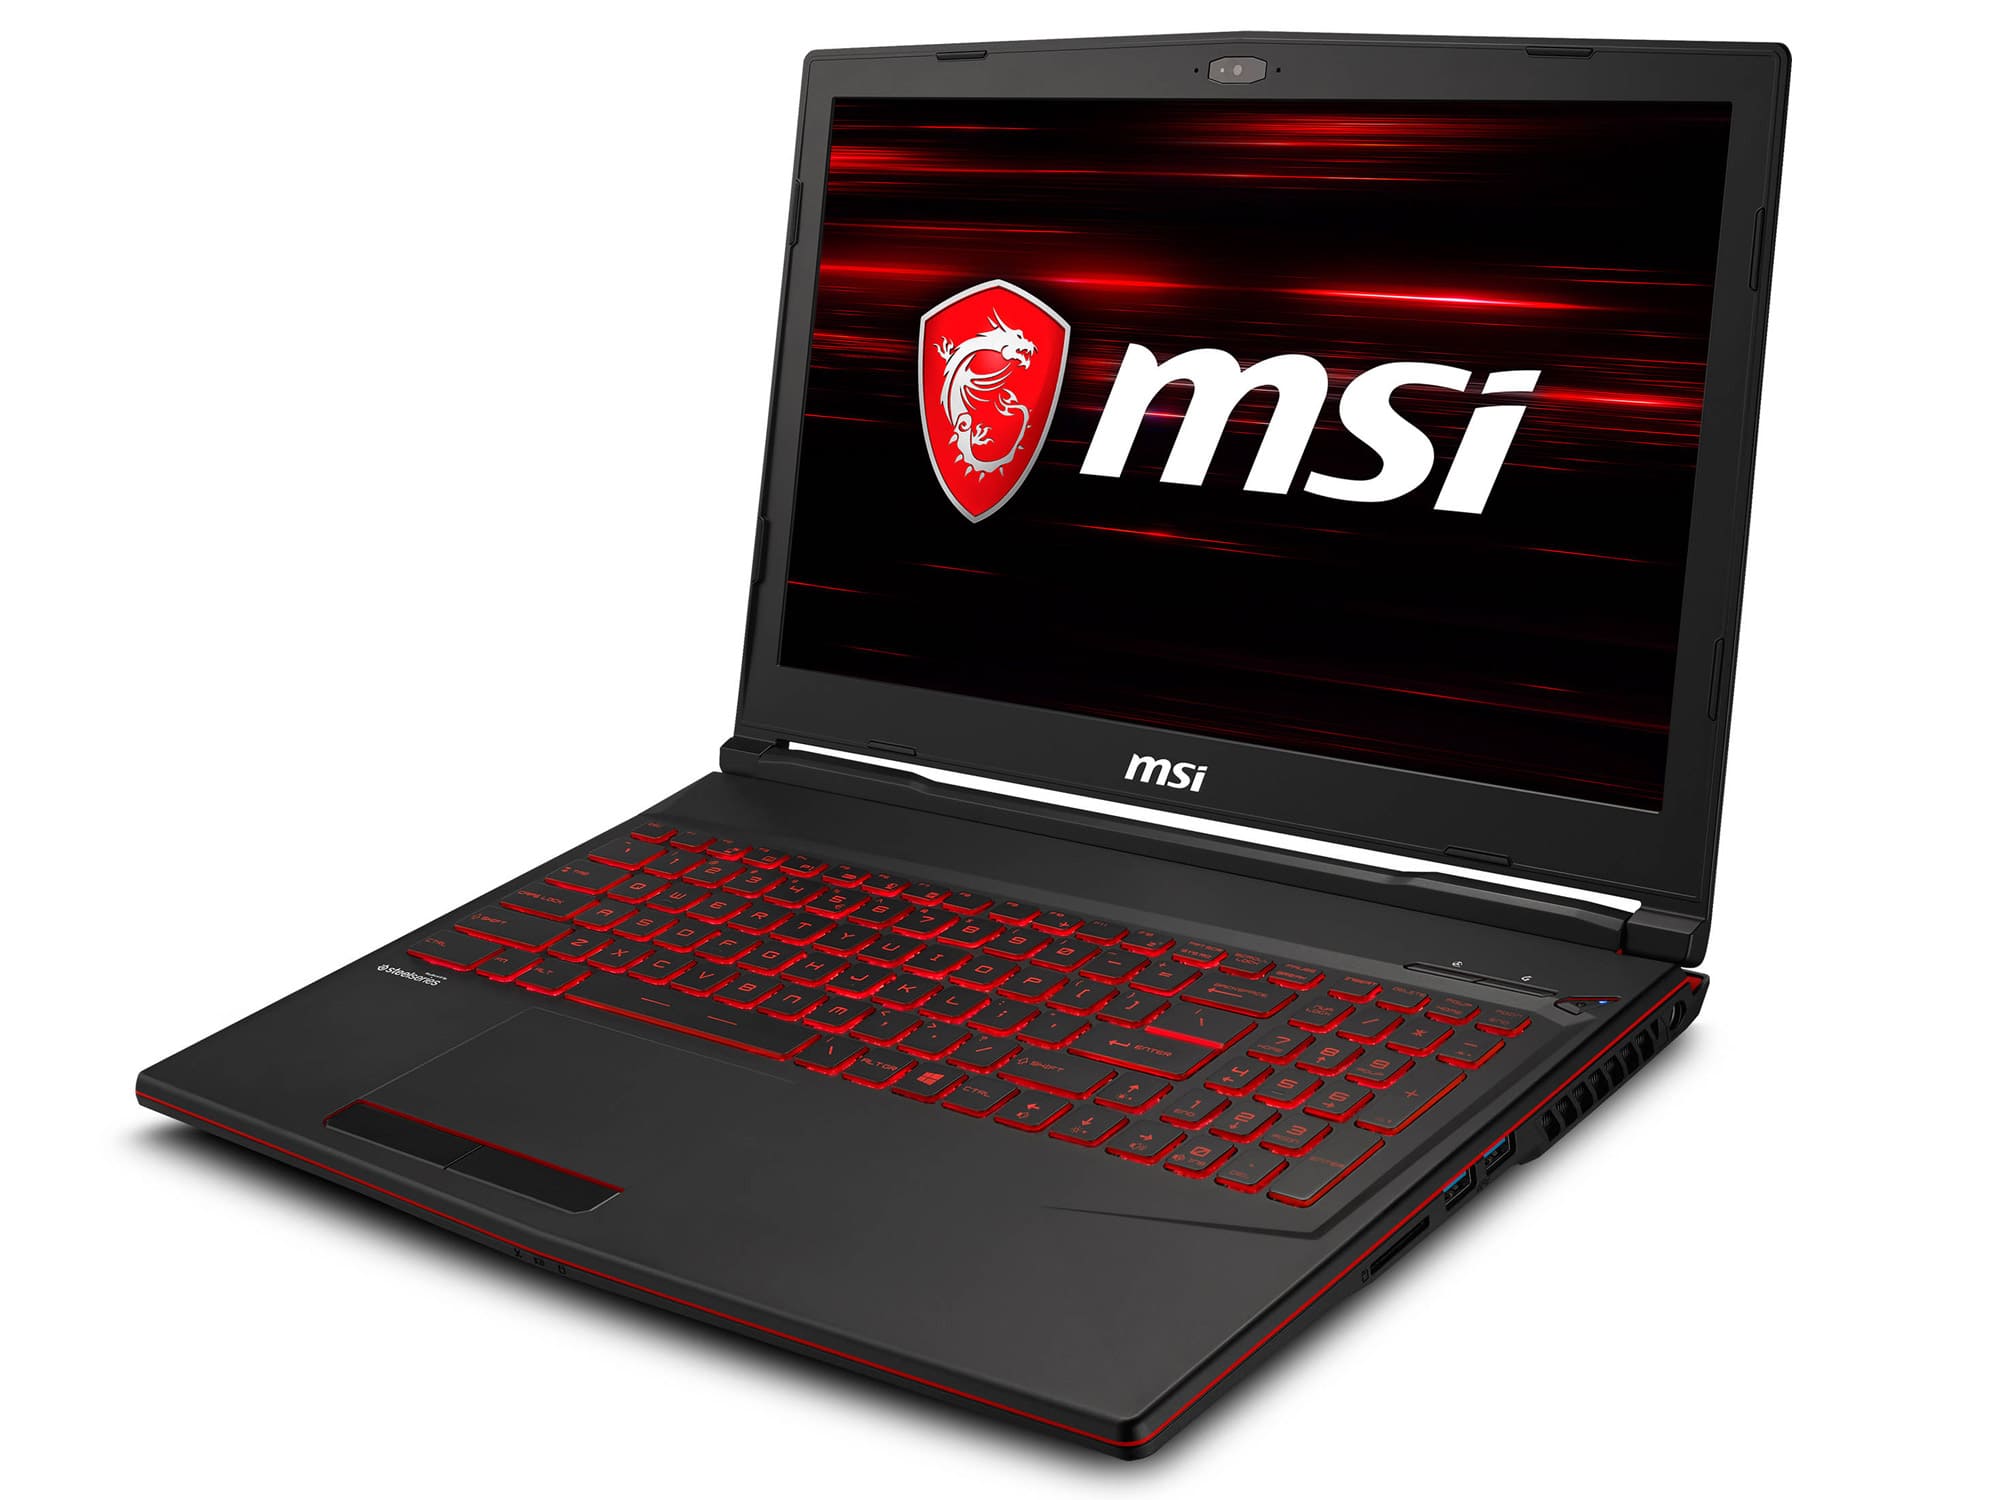 Laptop MSI GL63 8RC-265VN